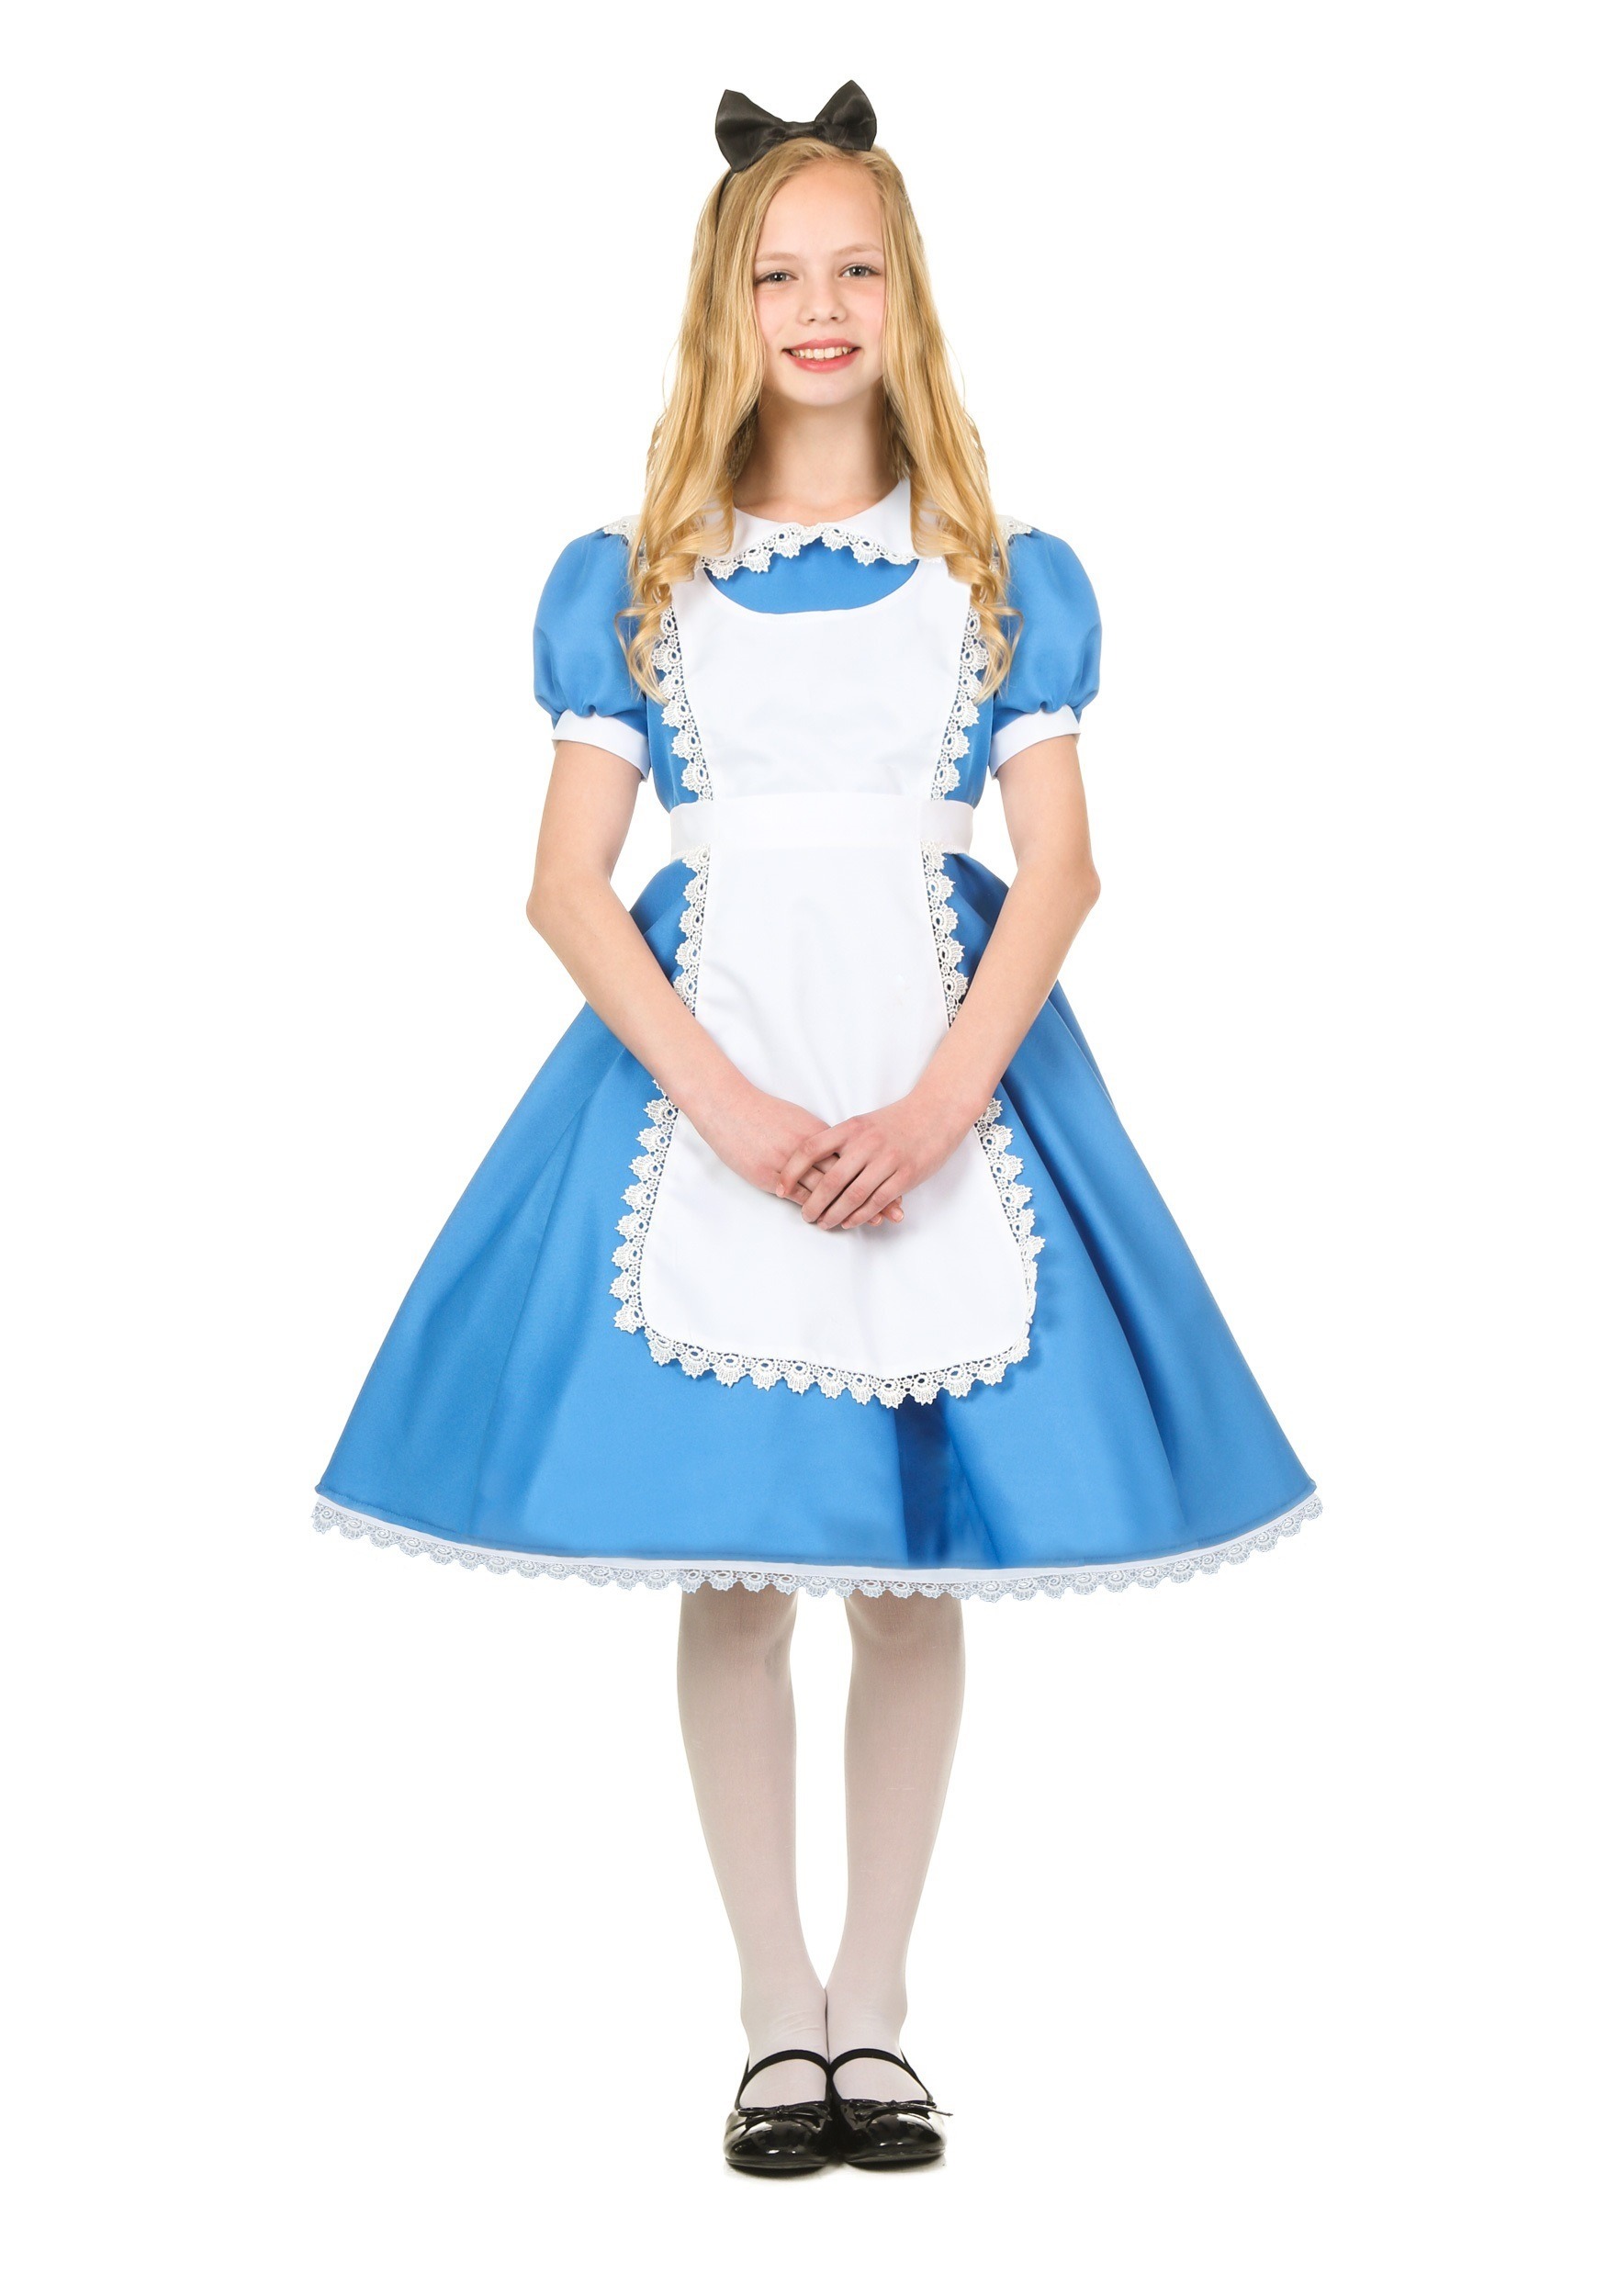 Photos - Fancy Dress Alice FUN Costumes Supreme  Costume for Girls Black/Blue/White FUN2 